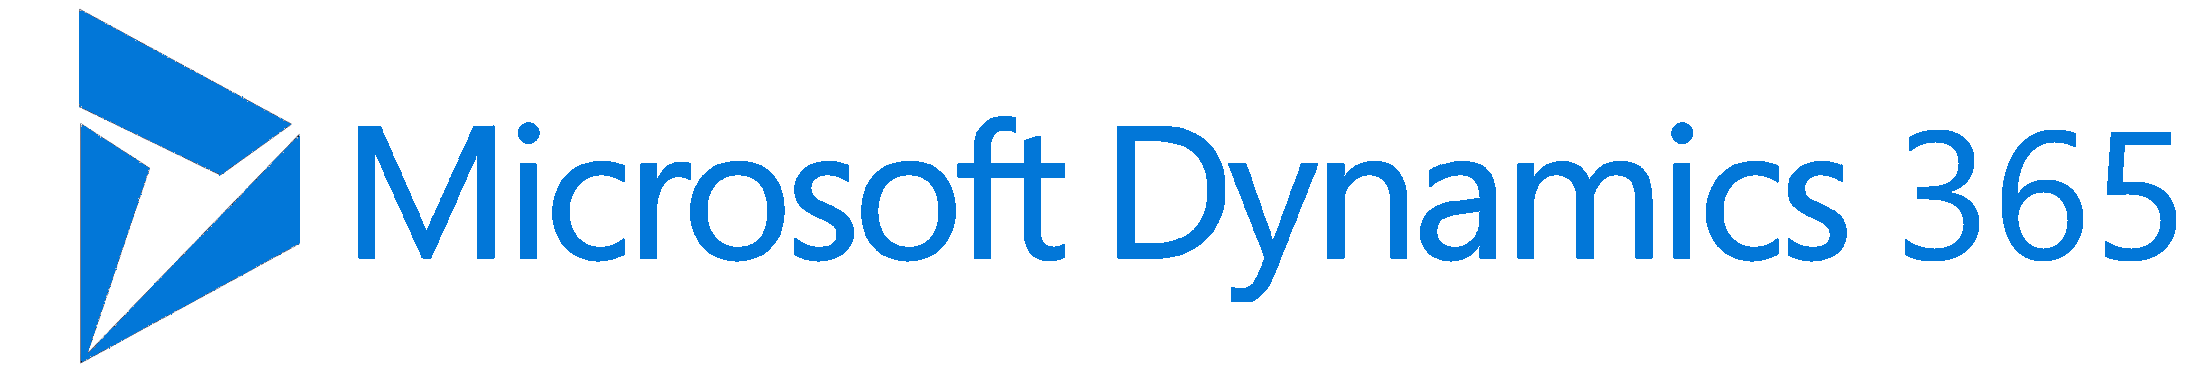 Dynamics 365 Logo - Microsoft Dynamics 365 Larger Logo - ixRM | Microsoft Dynamics 365 ...